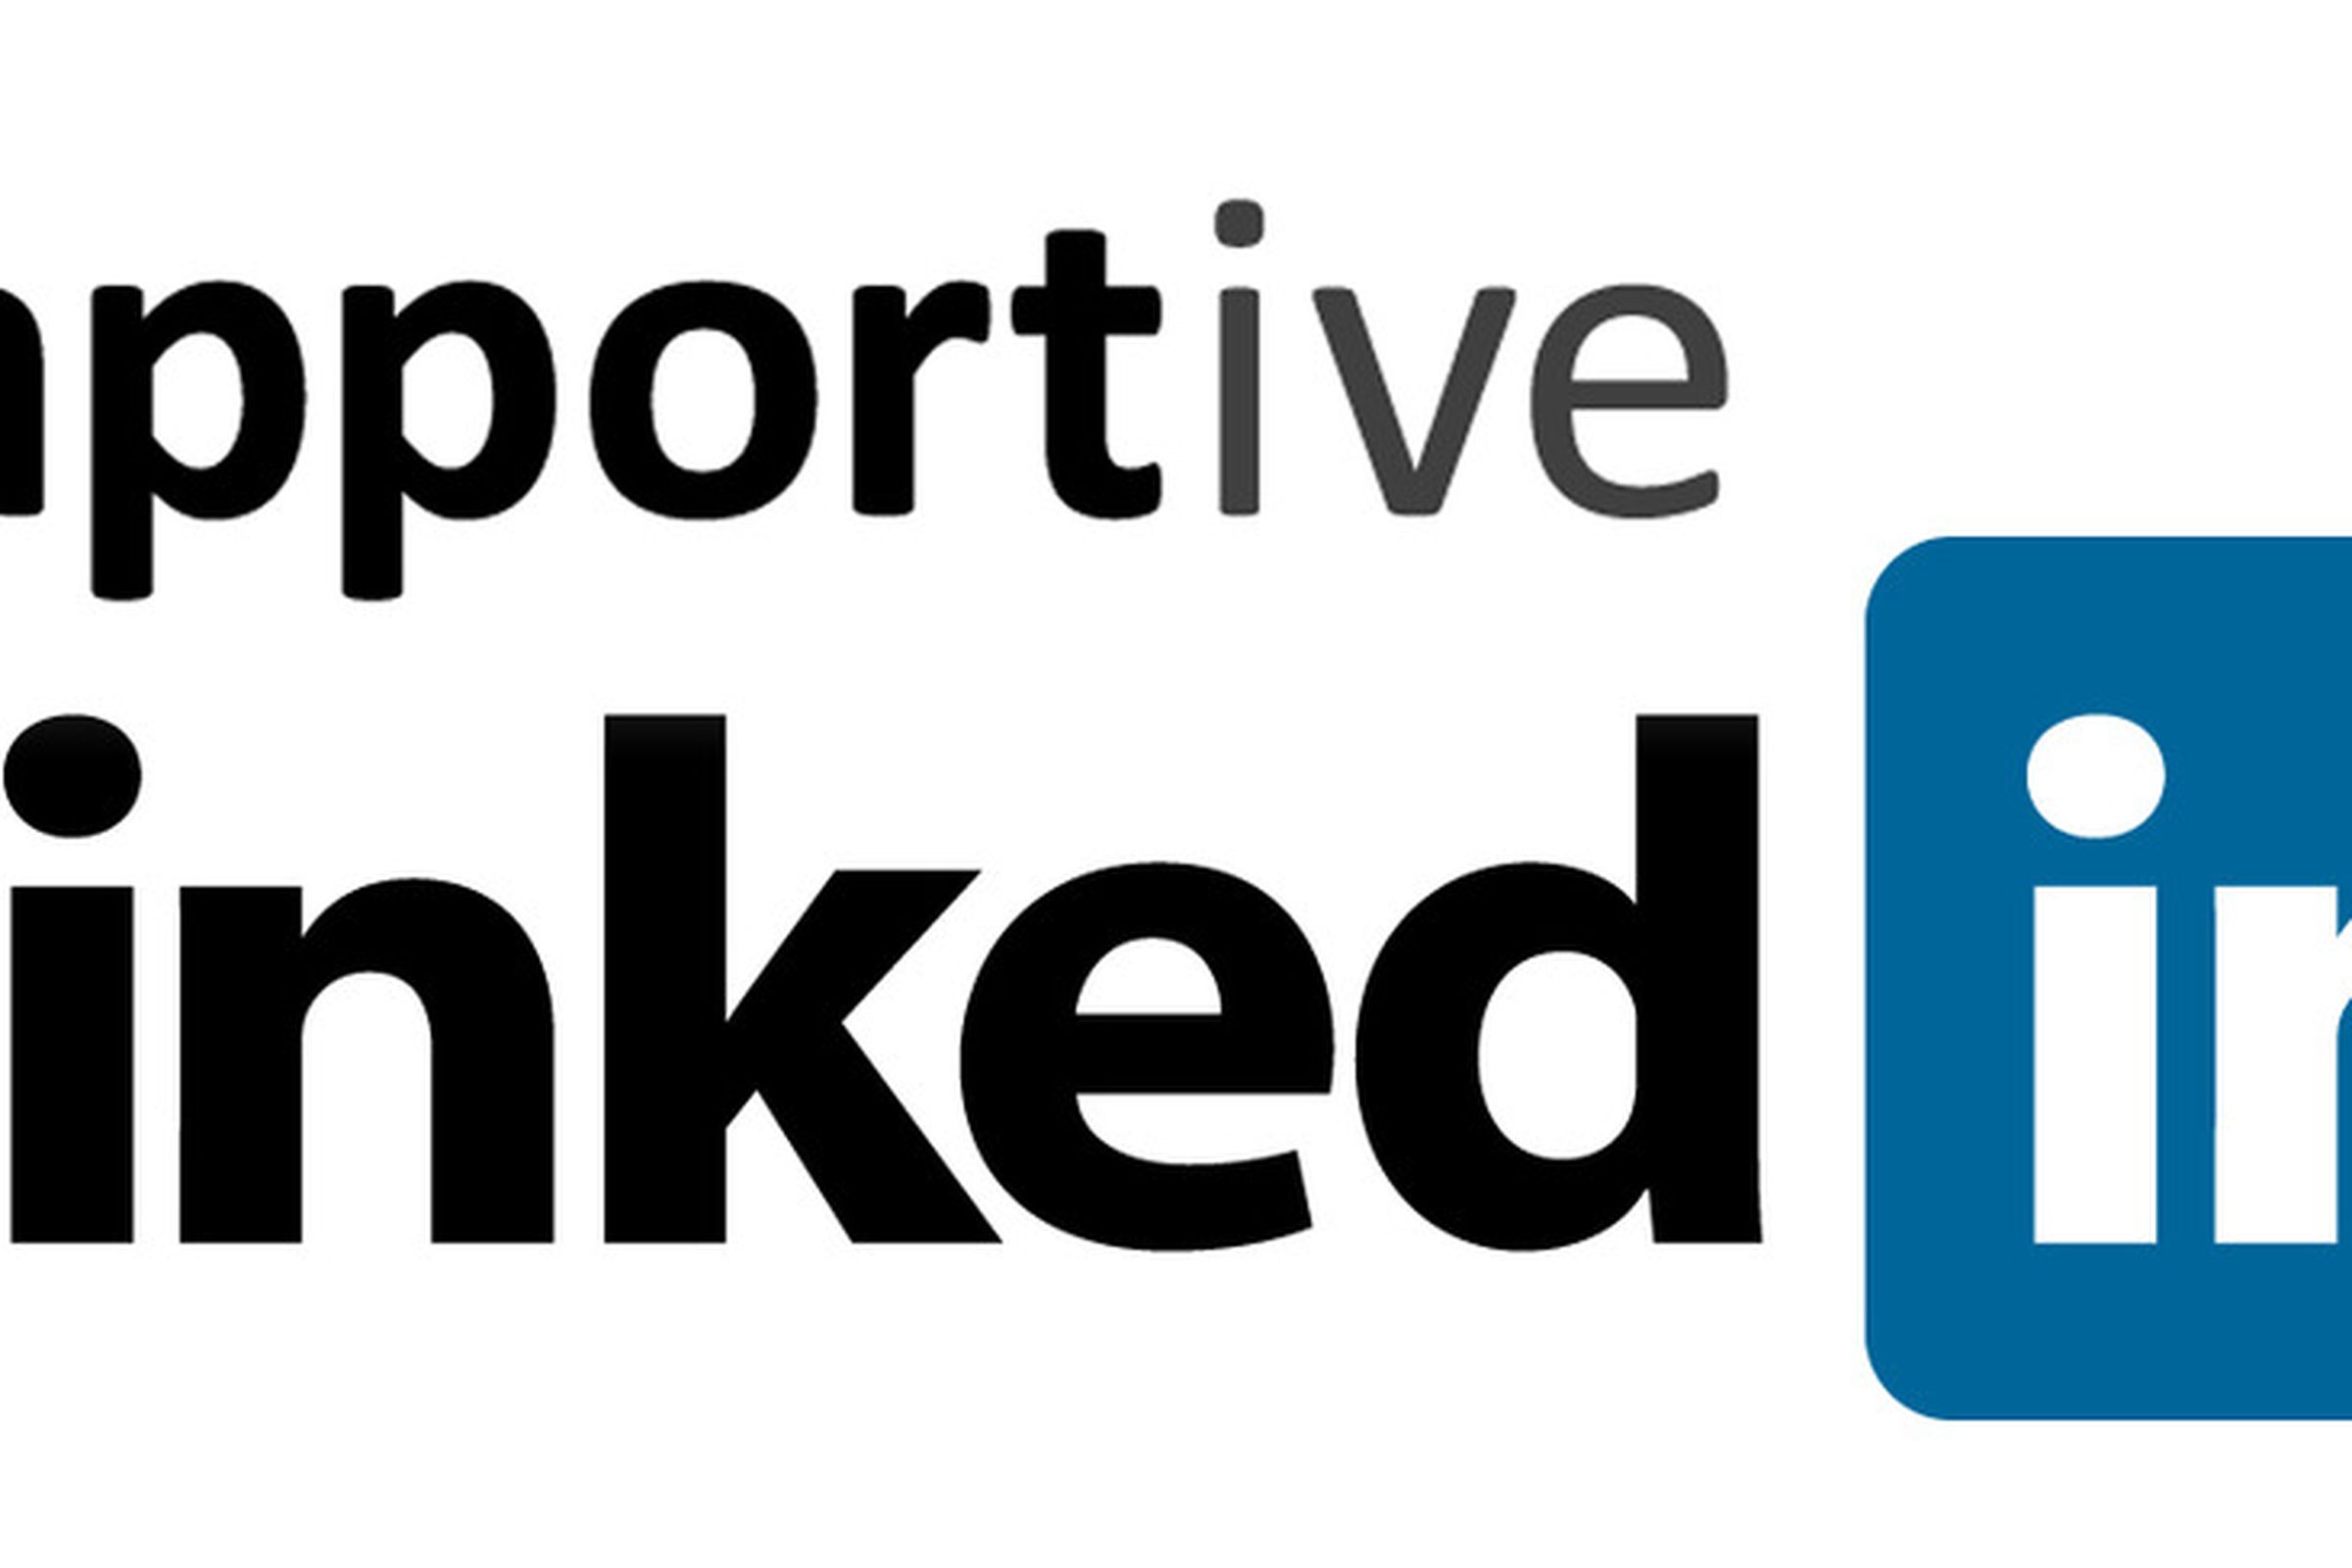 Rapportive LinkedIn logos